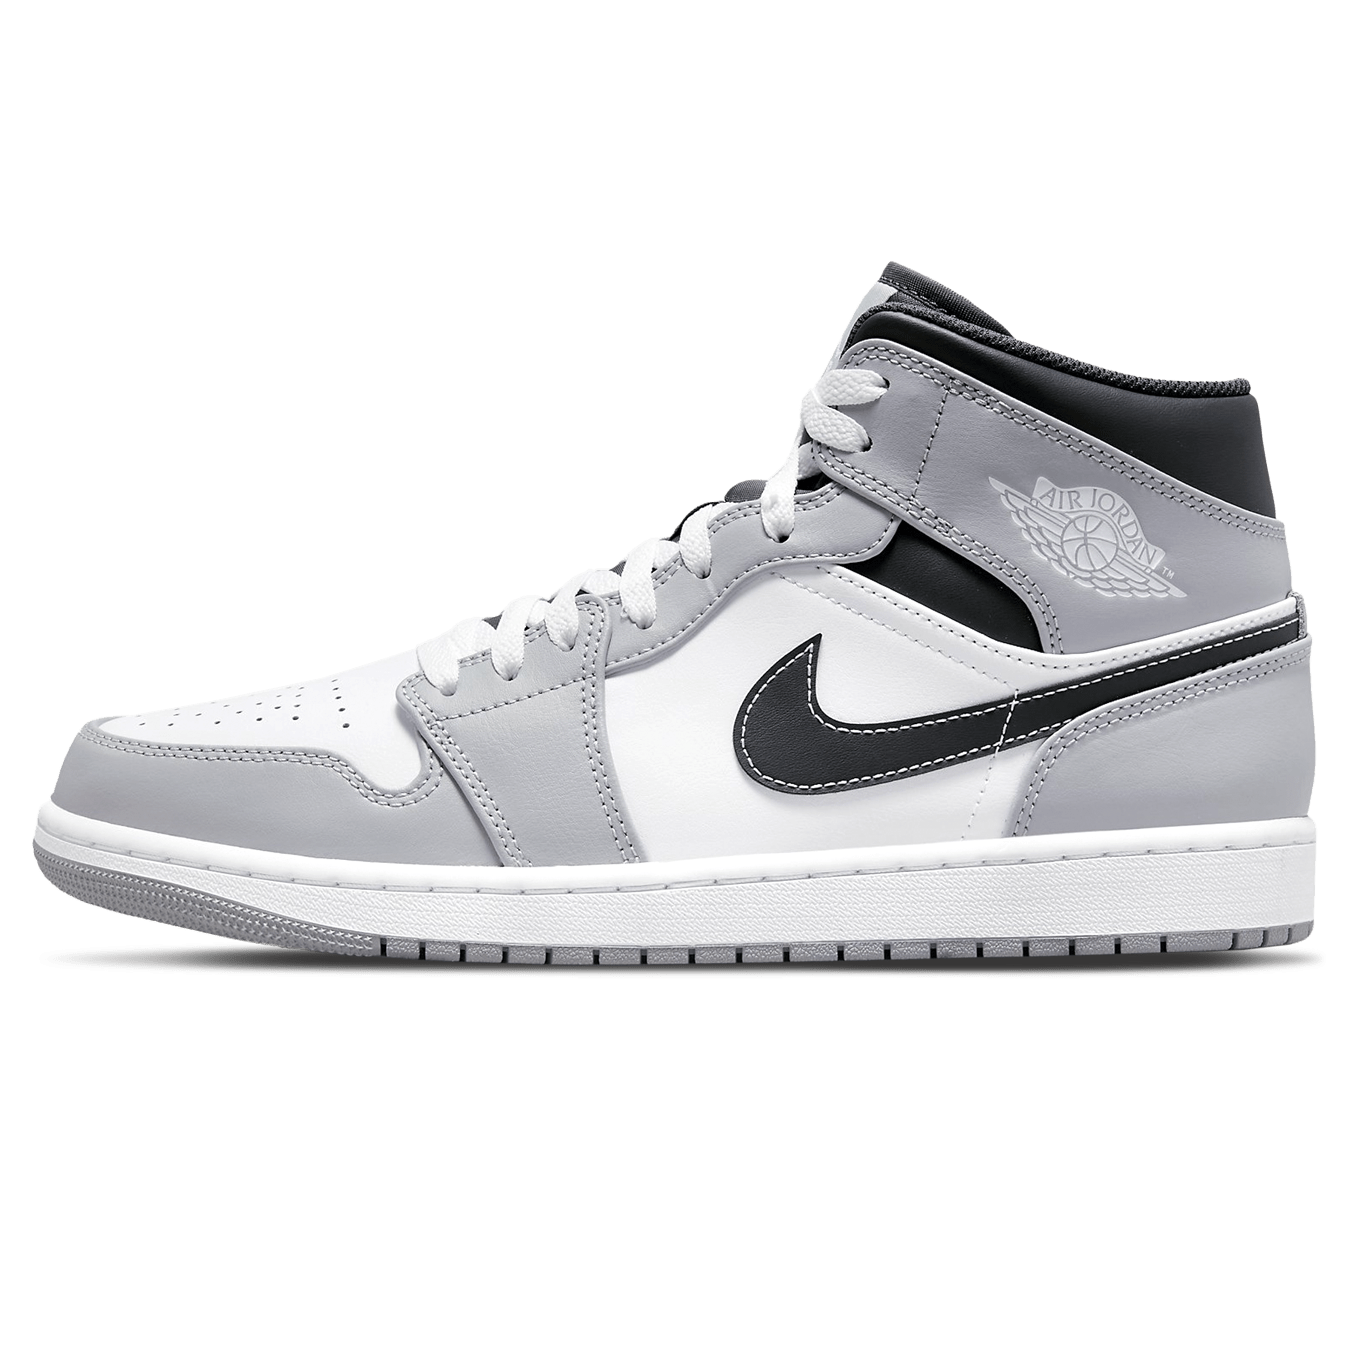 Nike Air Jordan 1 Mid Light Smoke Grey Anthracite – Double Boxed